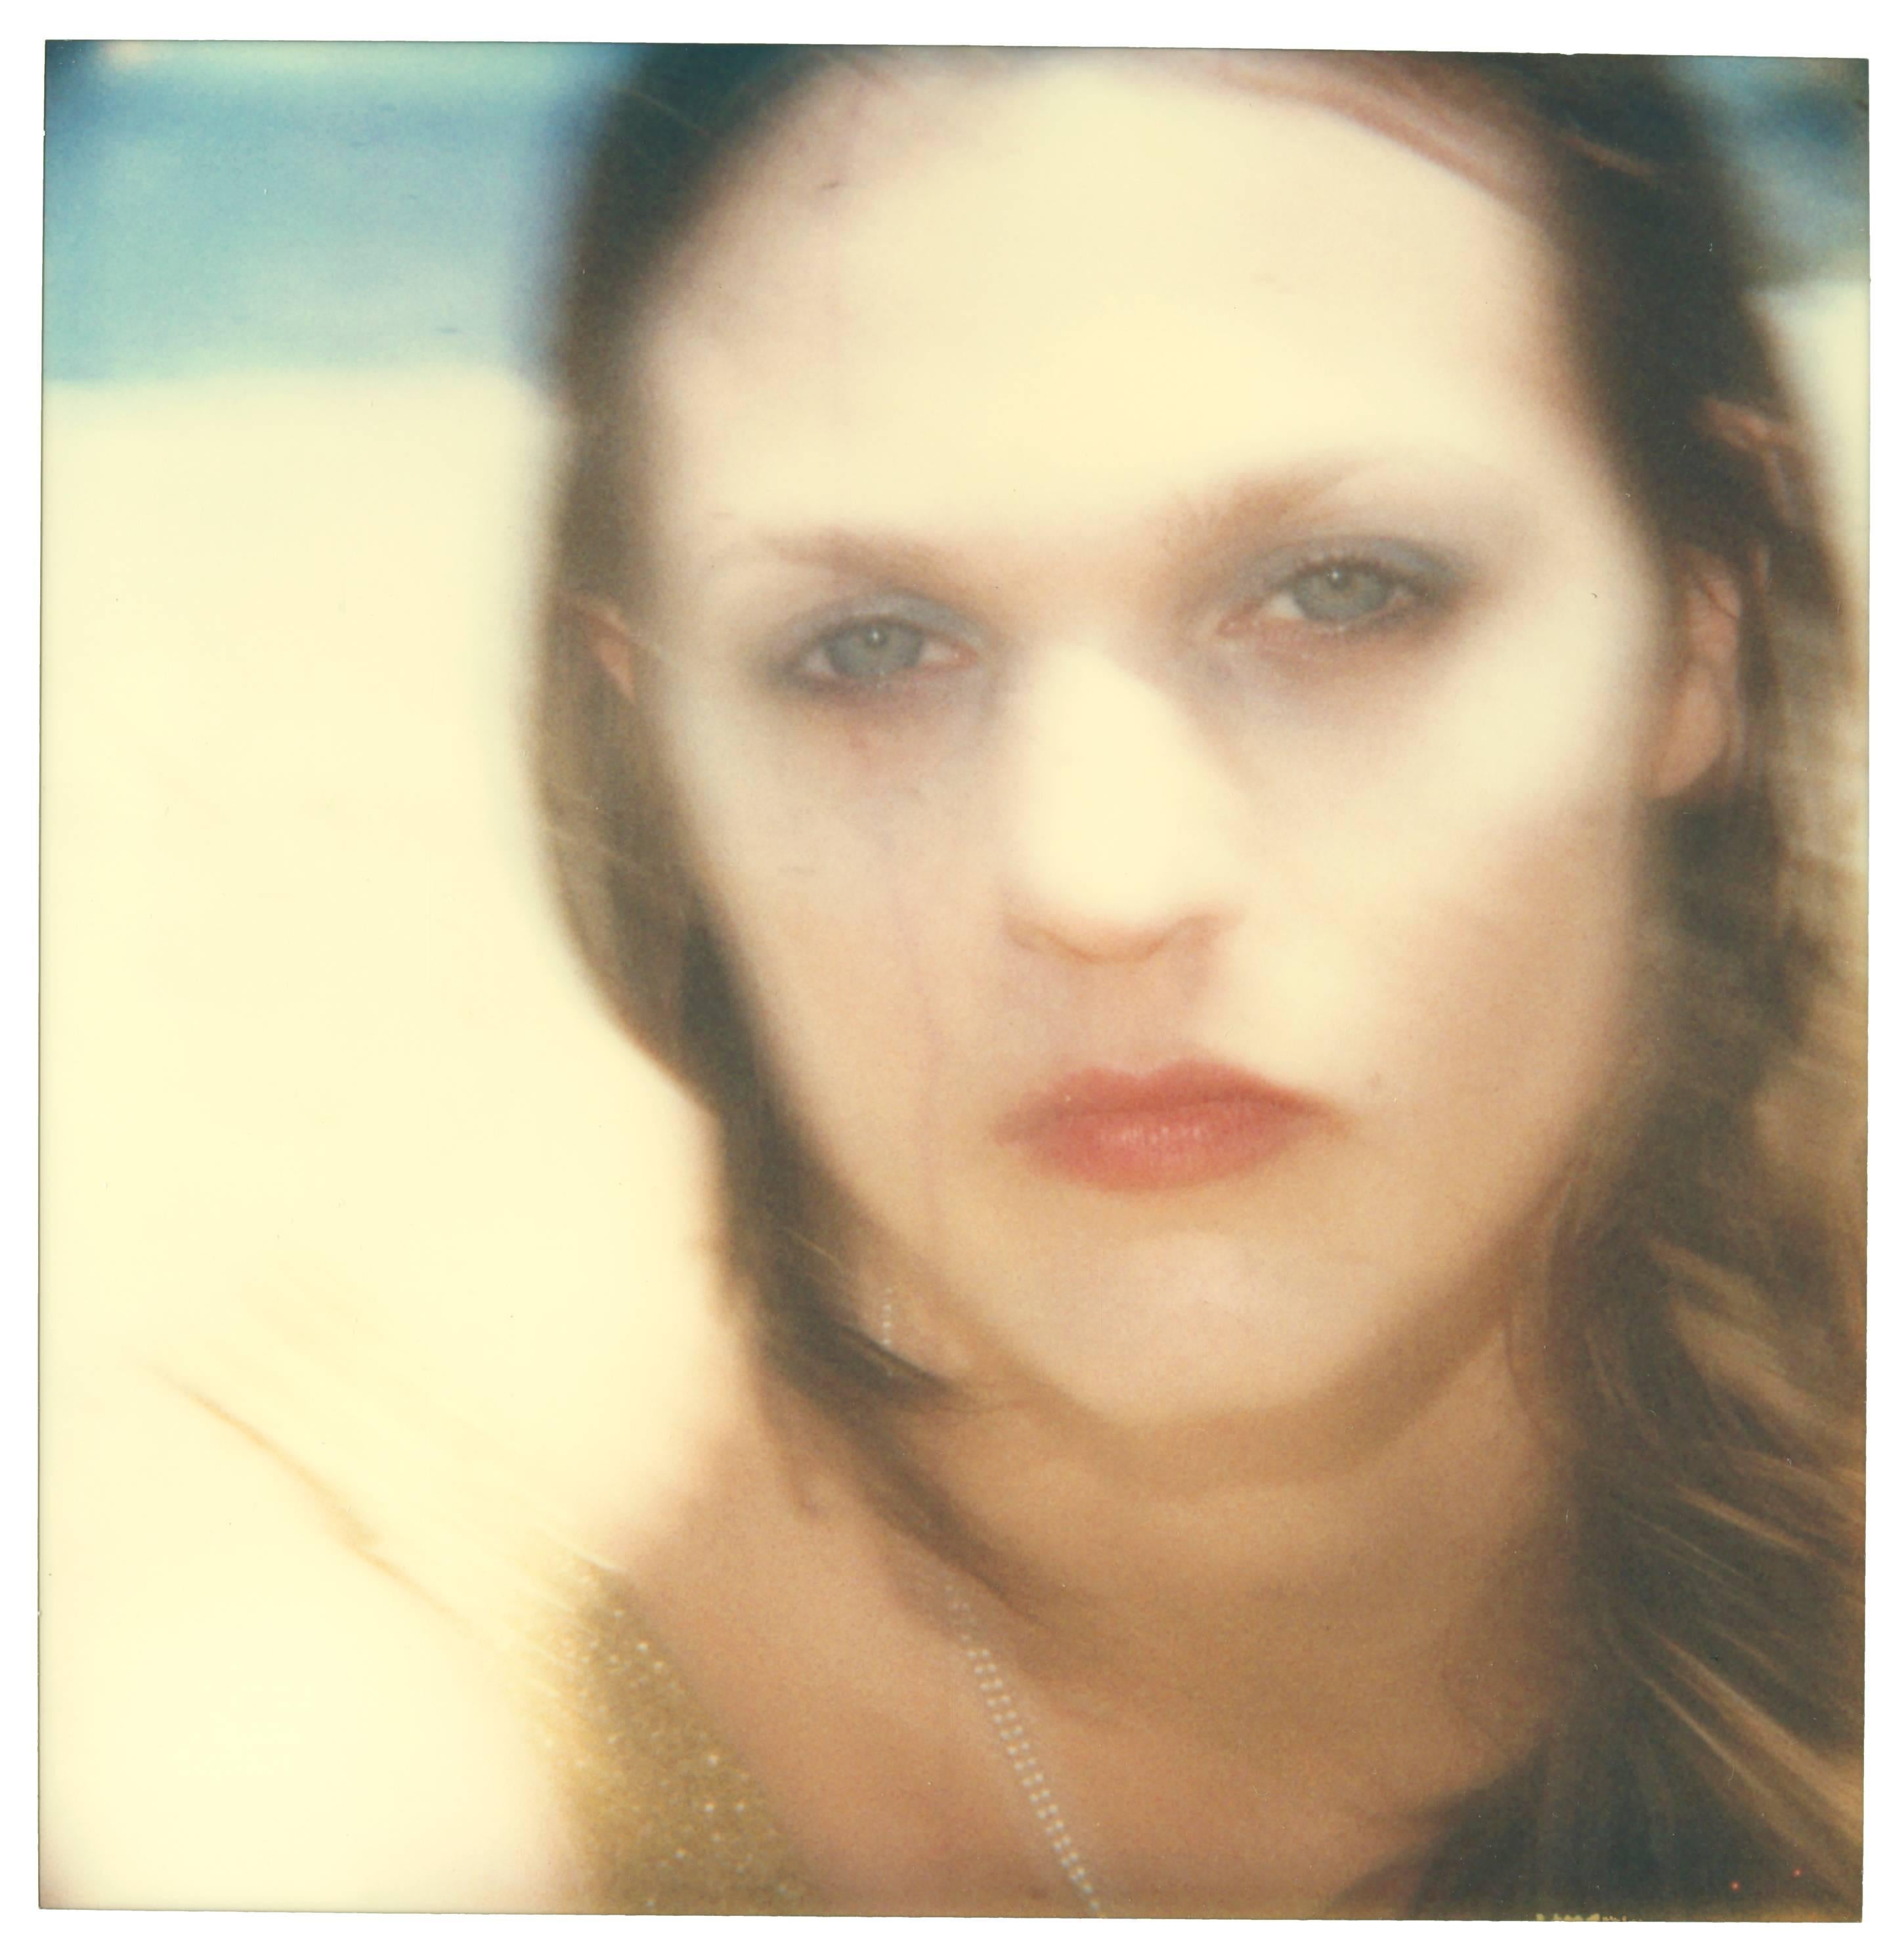 Stefanie Schneider Portrait Photograph - Like Tears in the Rain (Beachshoot) - analog, Polaroid, hand-print, Contemporar